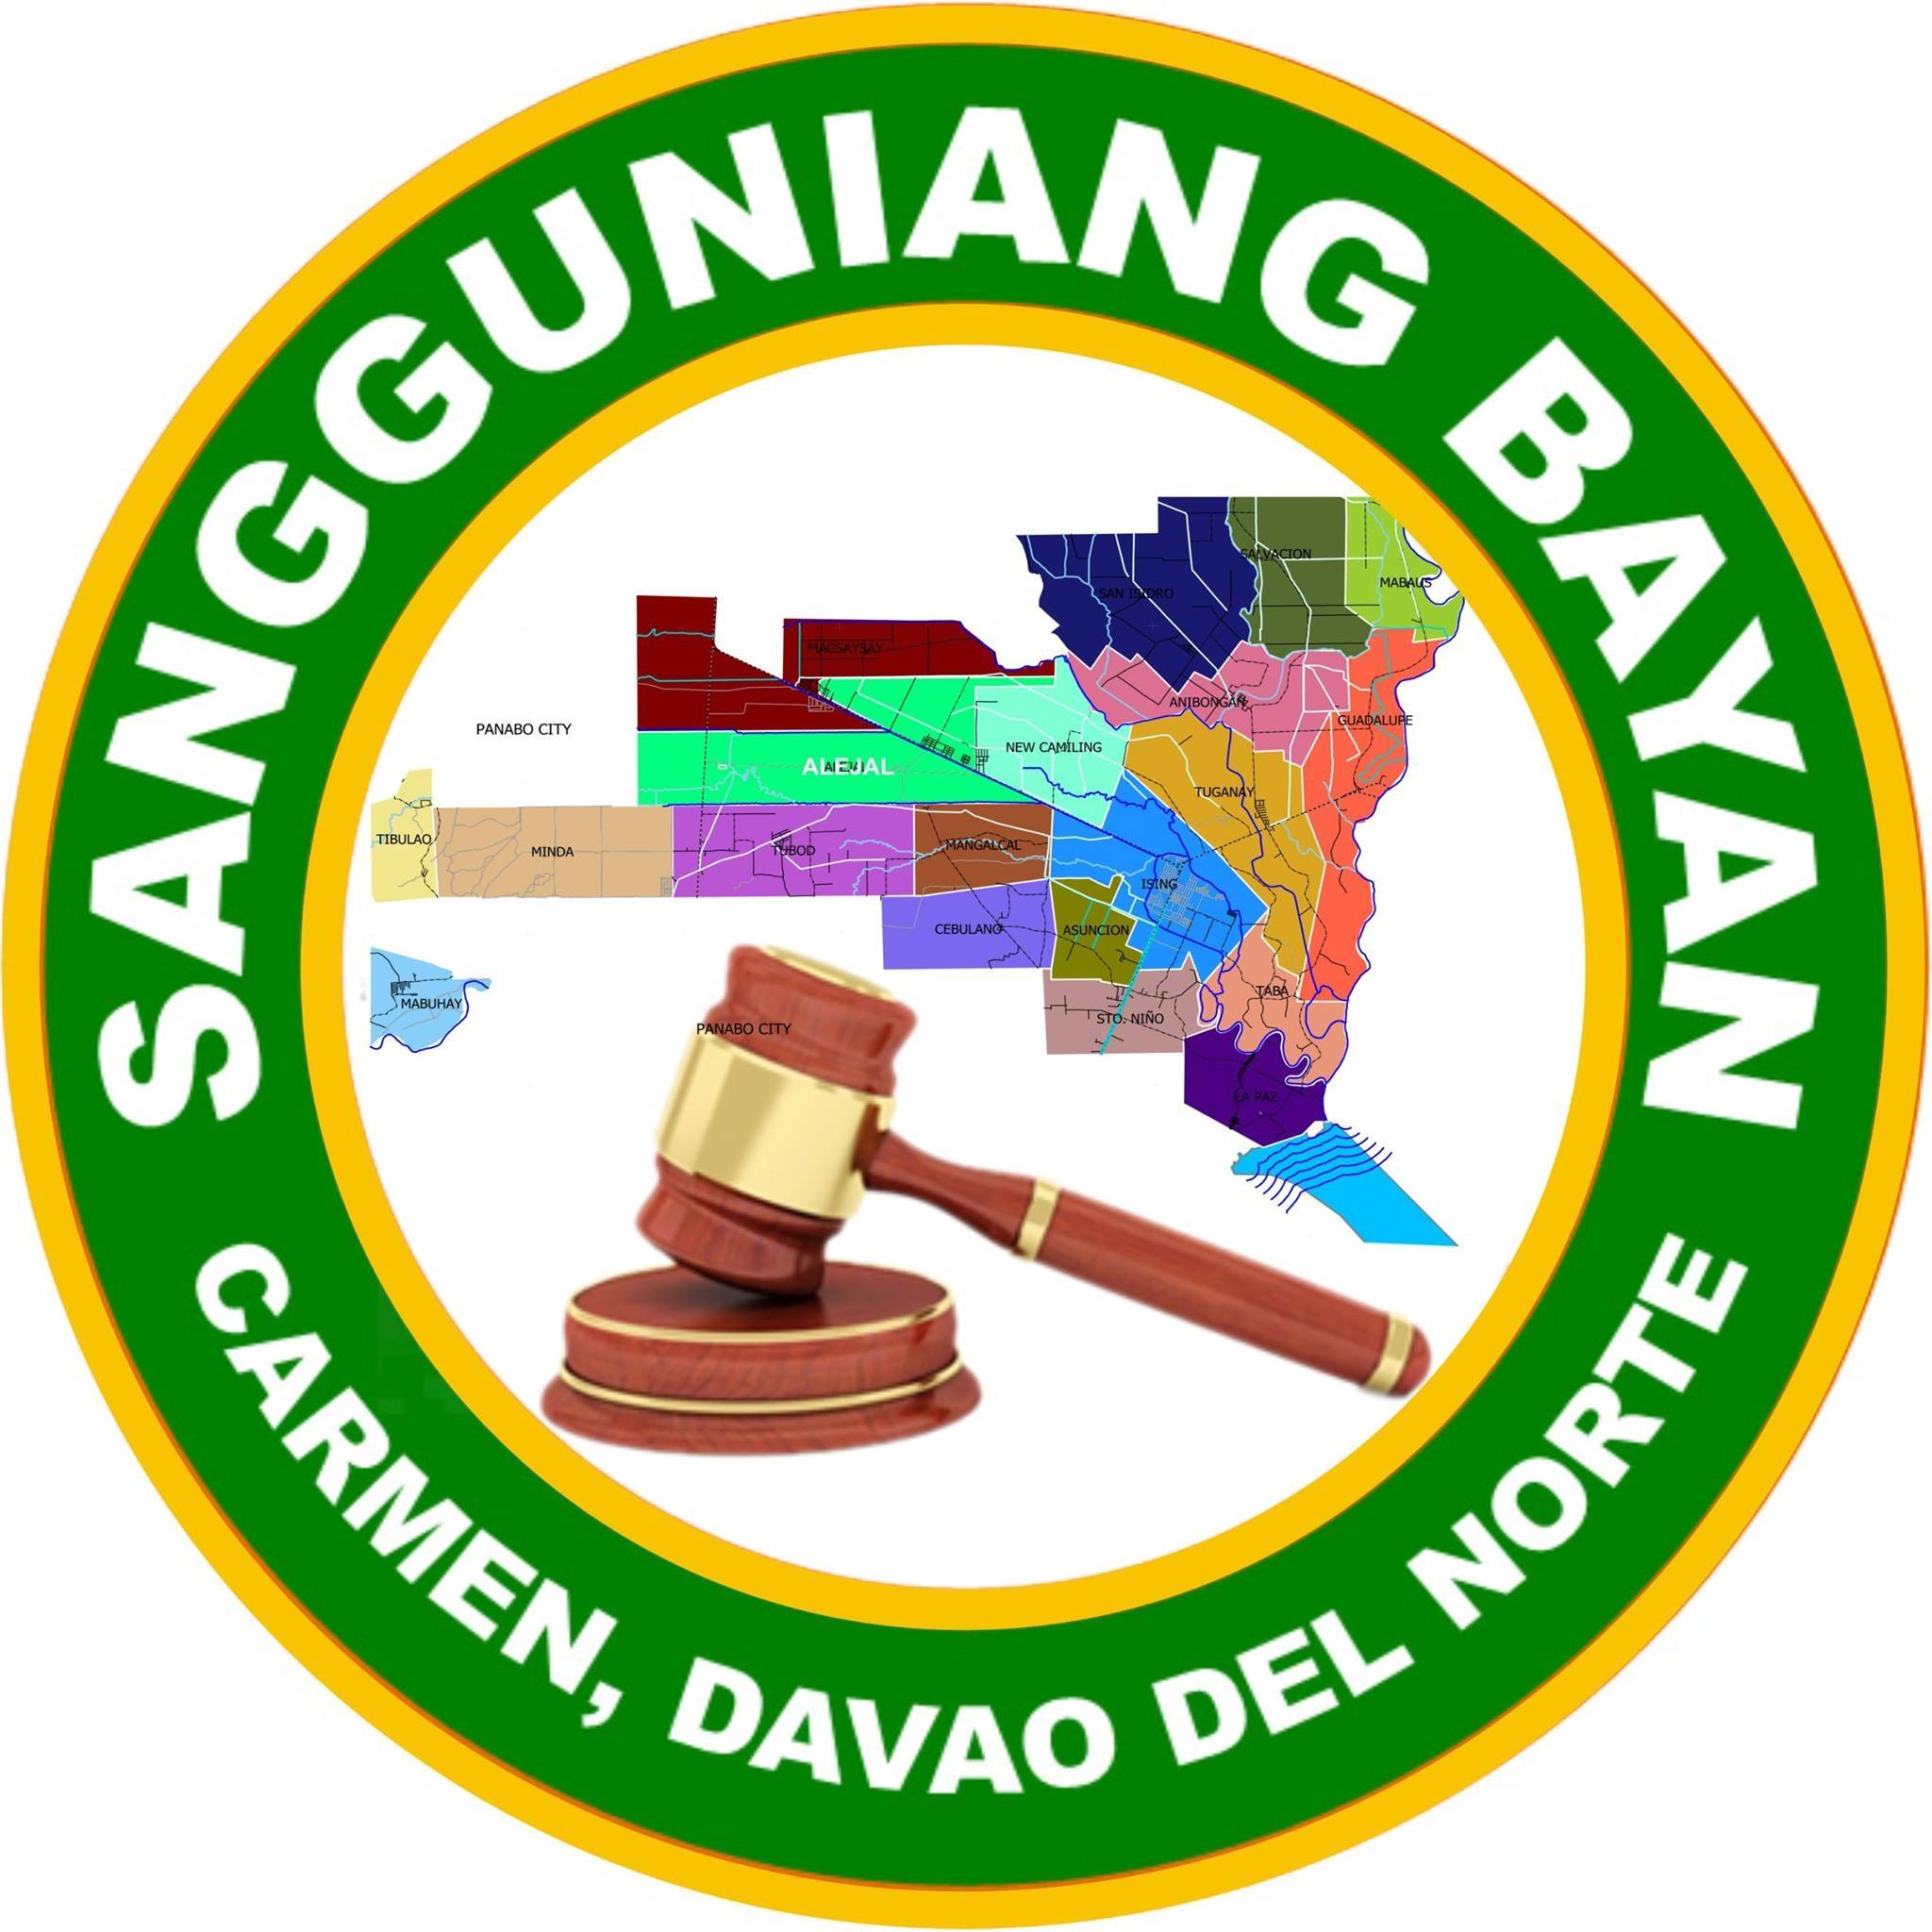 Read more about the article Municipality of Carmen – Davao Del Norte